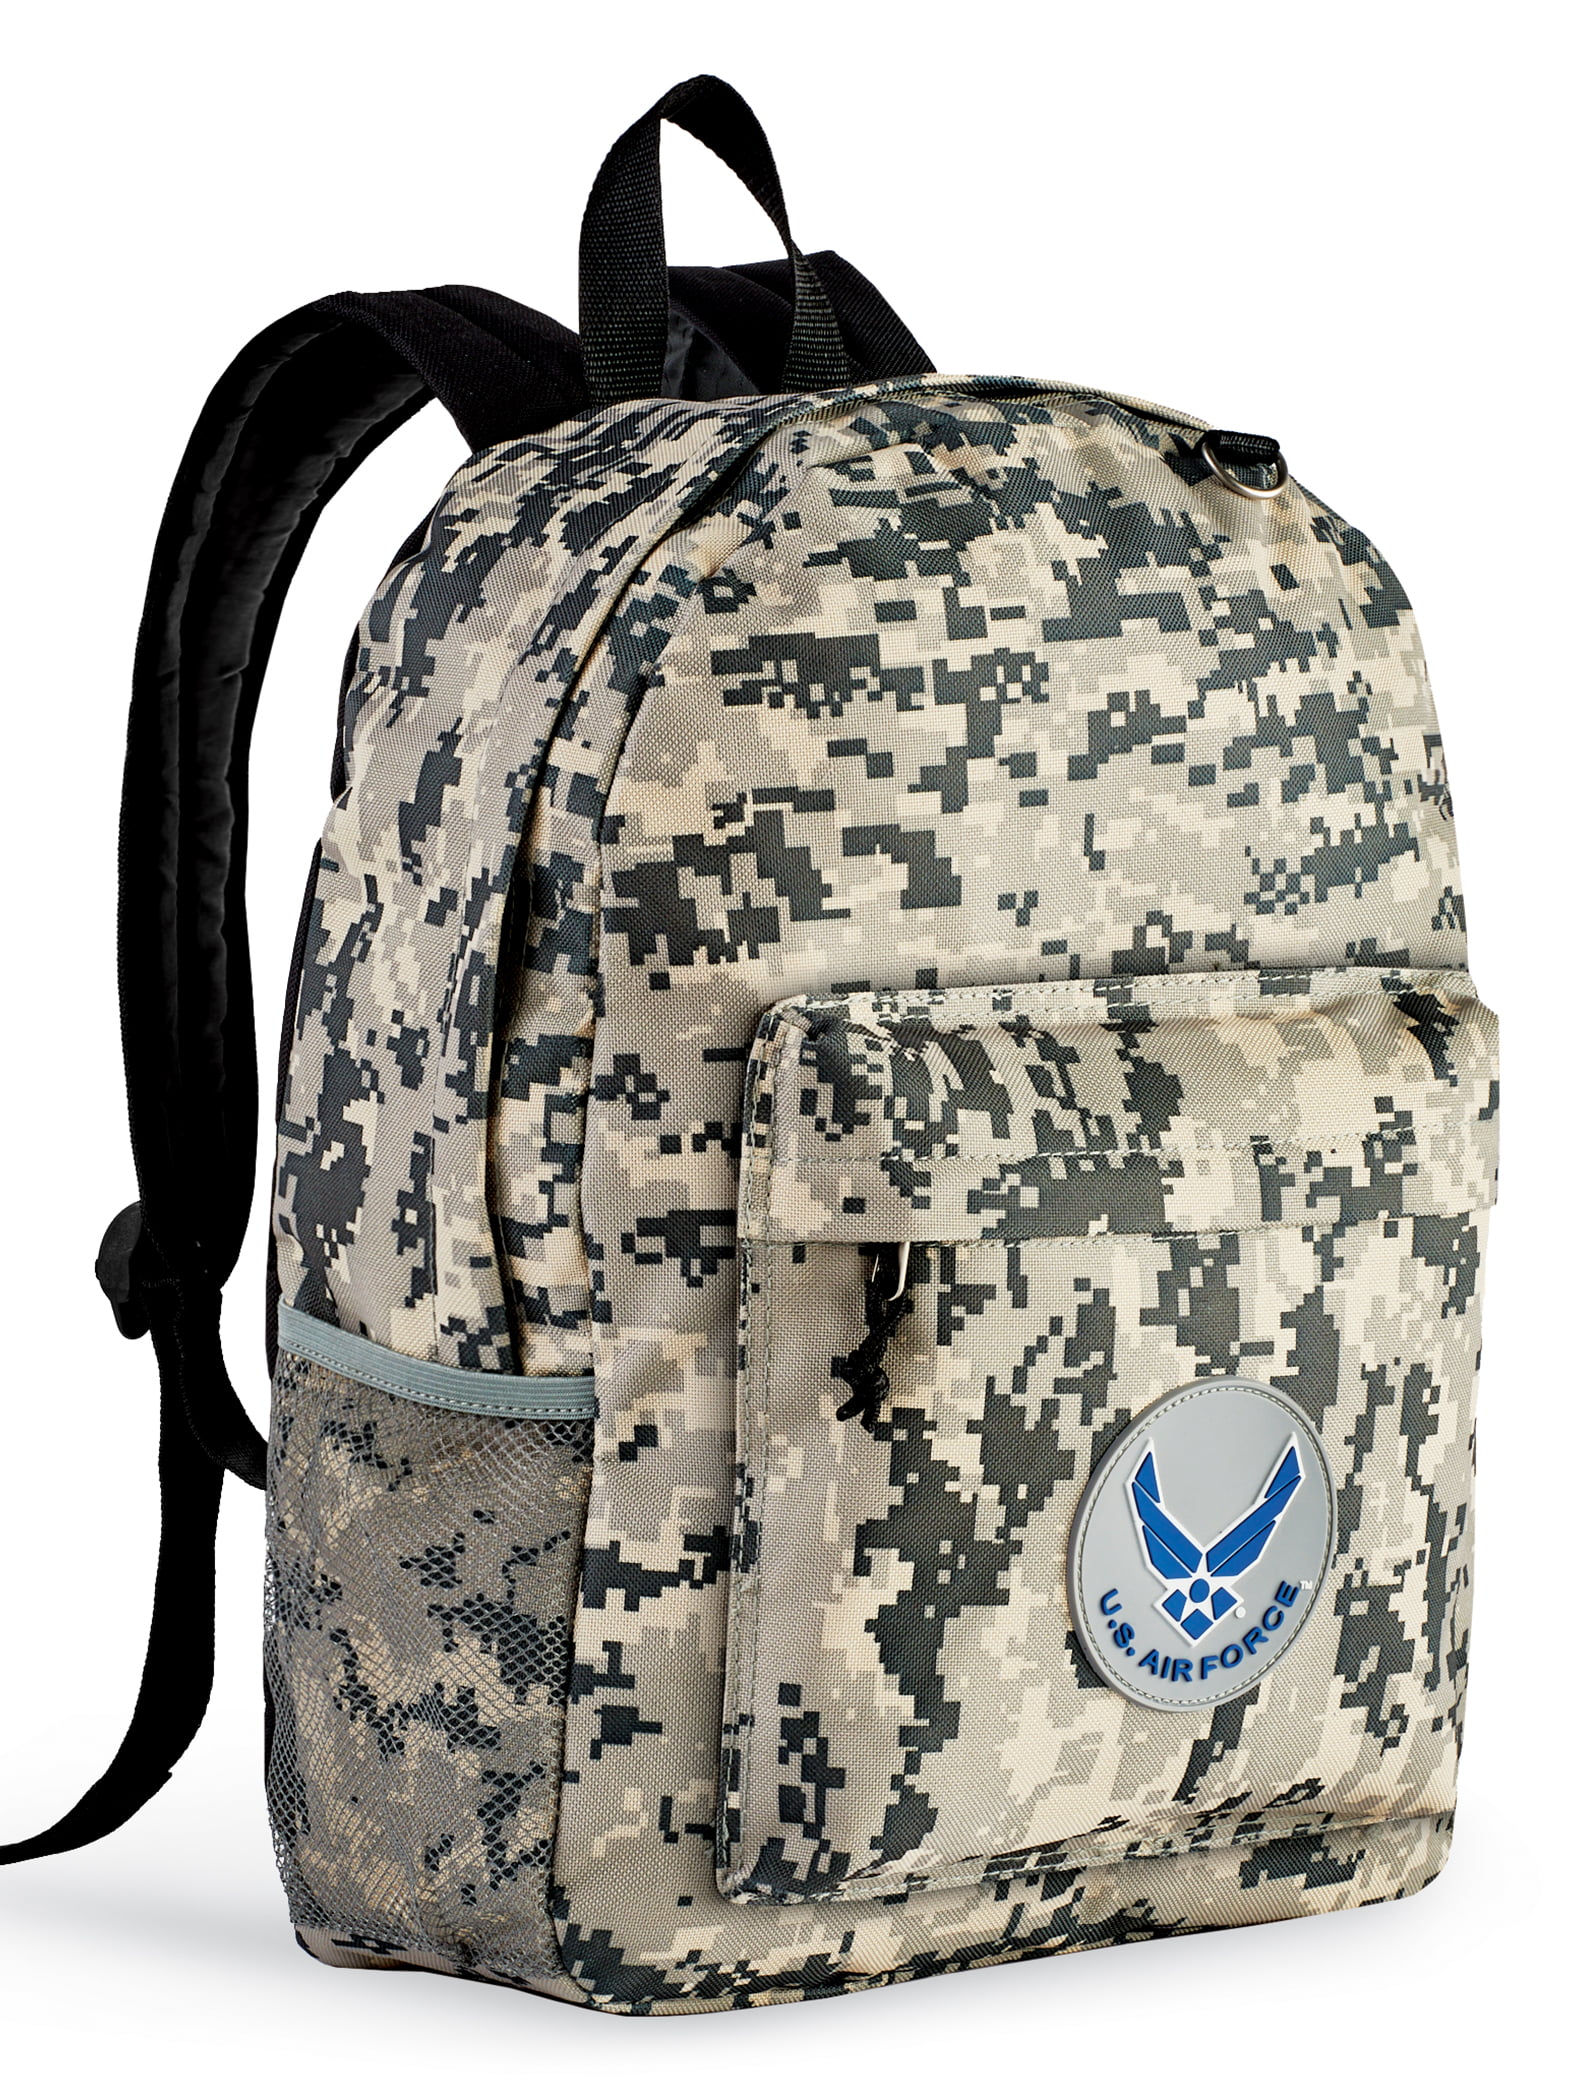 Semper Fi US Marine Corps Gym Bag Lightweight Sport Bookbag Men&Women Drawstring Backpack for Hiking Travel Beach Yoga Running Kids School 